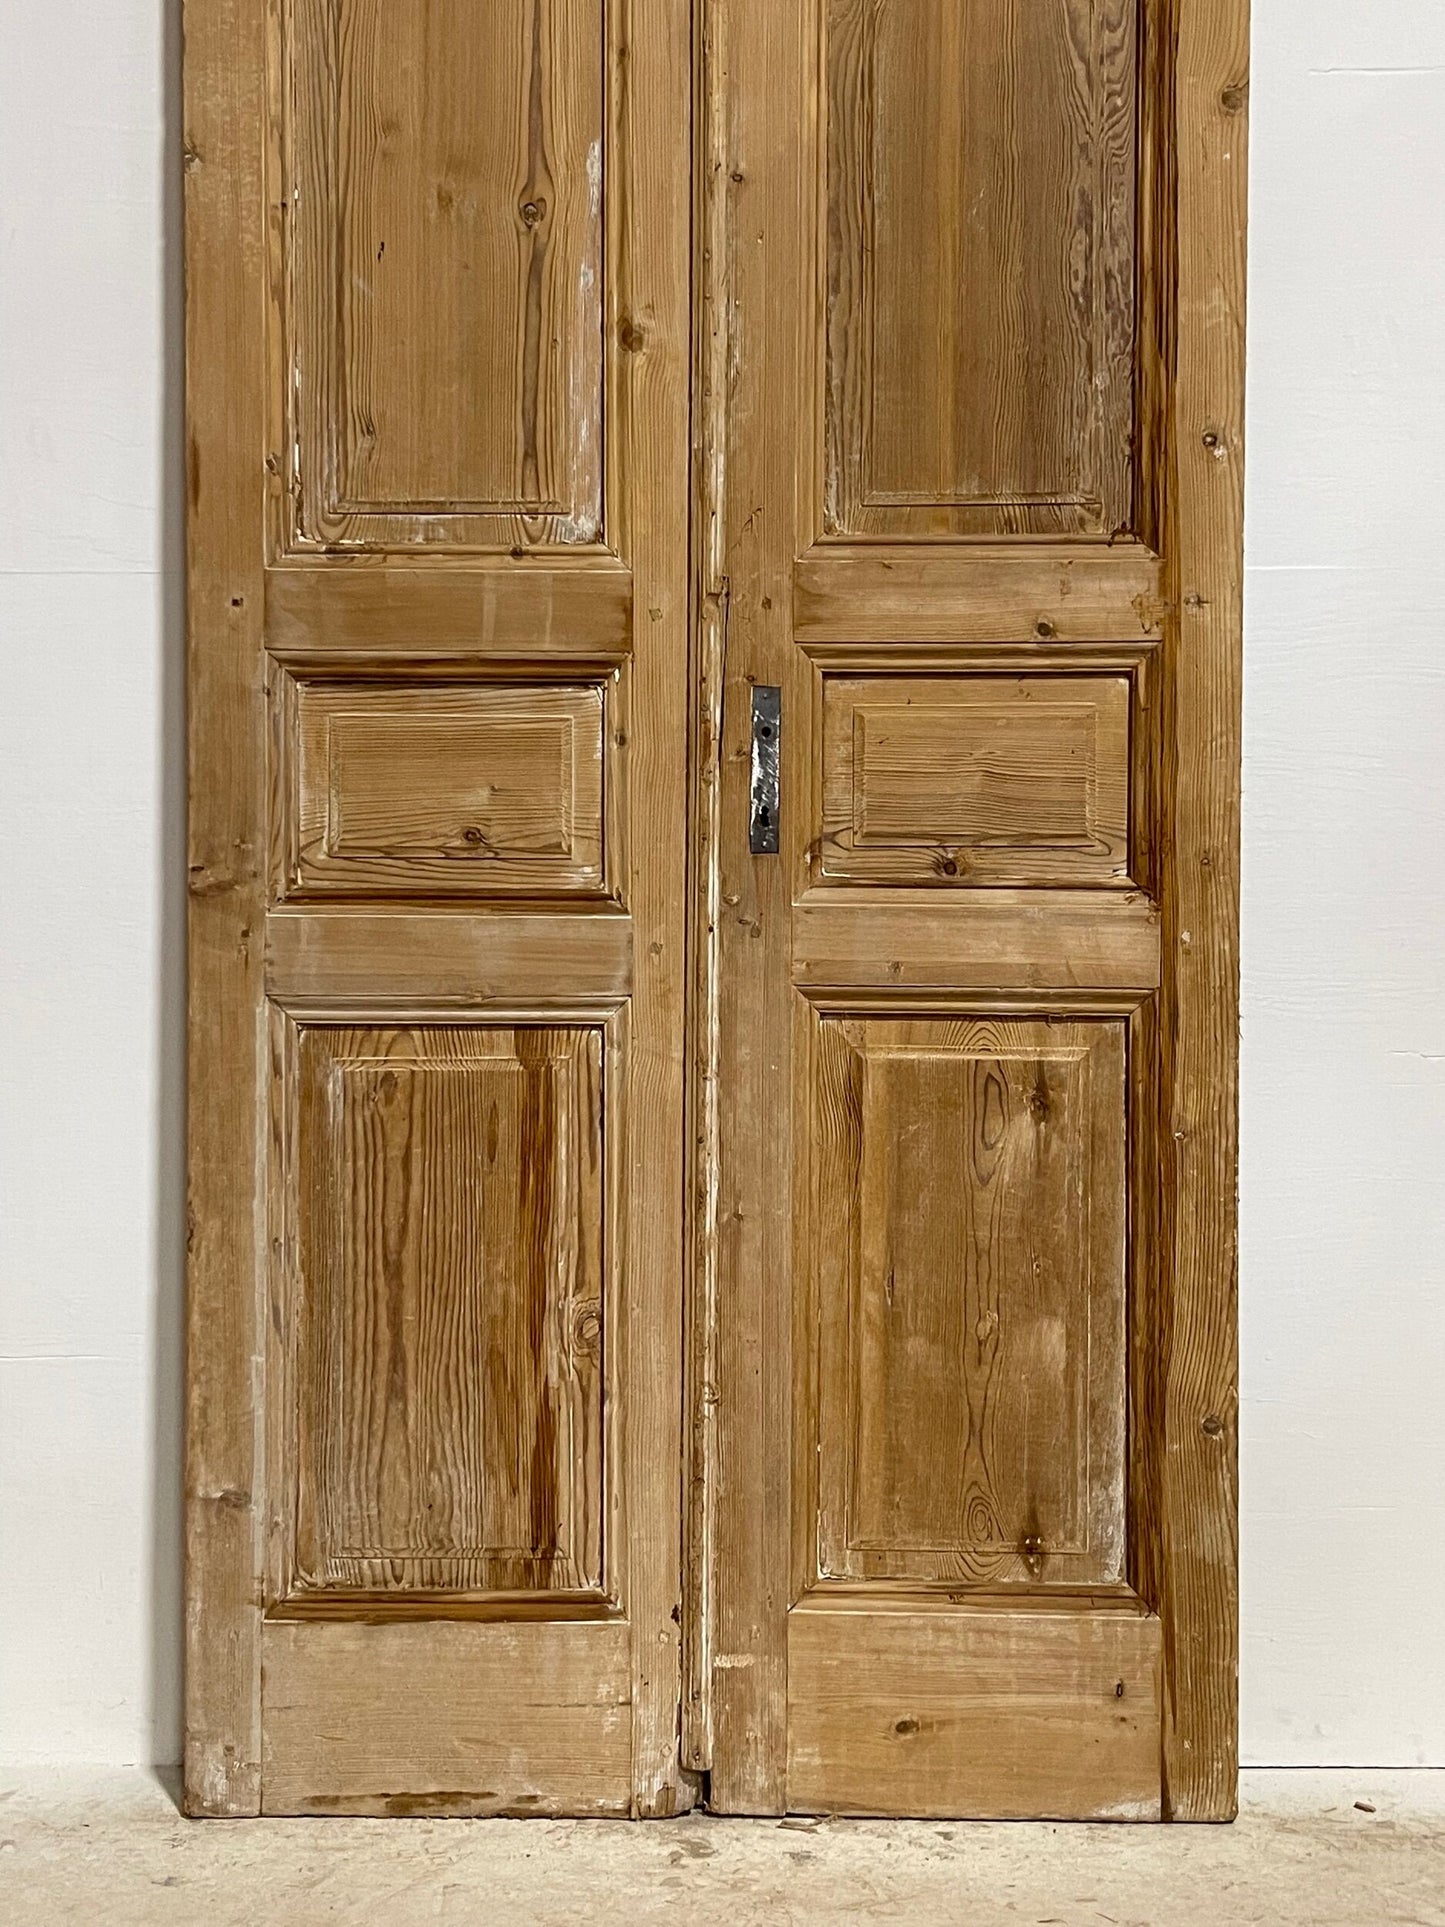 Antique French doors (93.25x40.25) H0157s